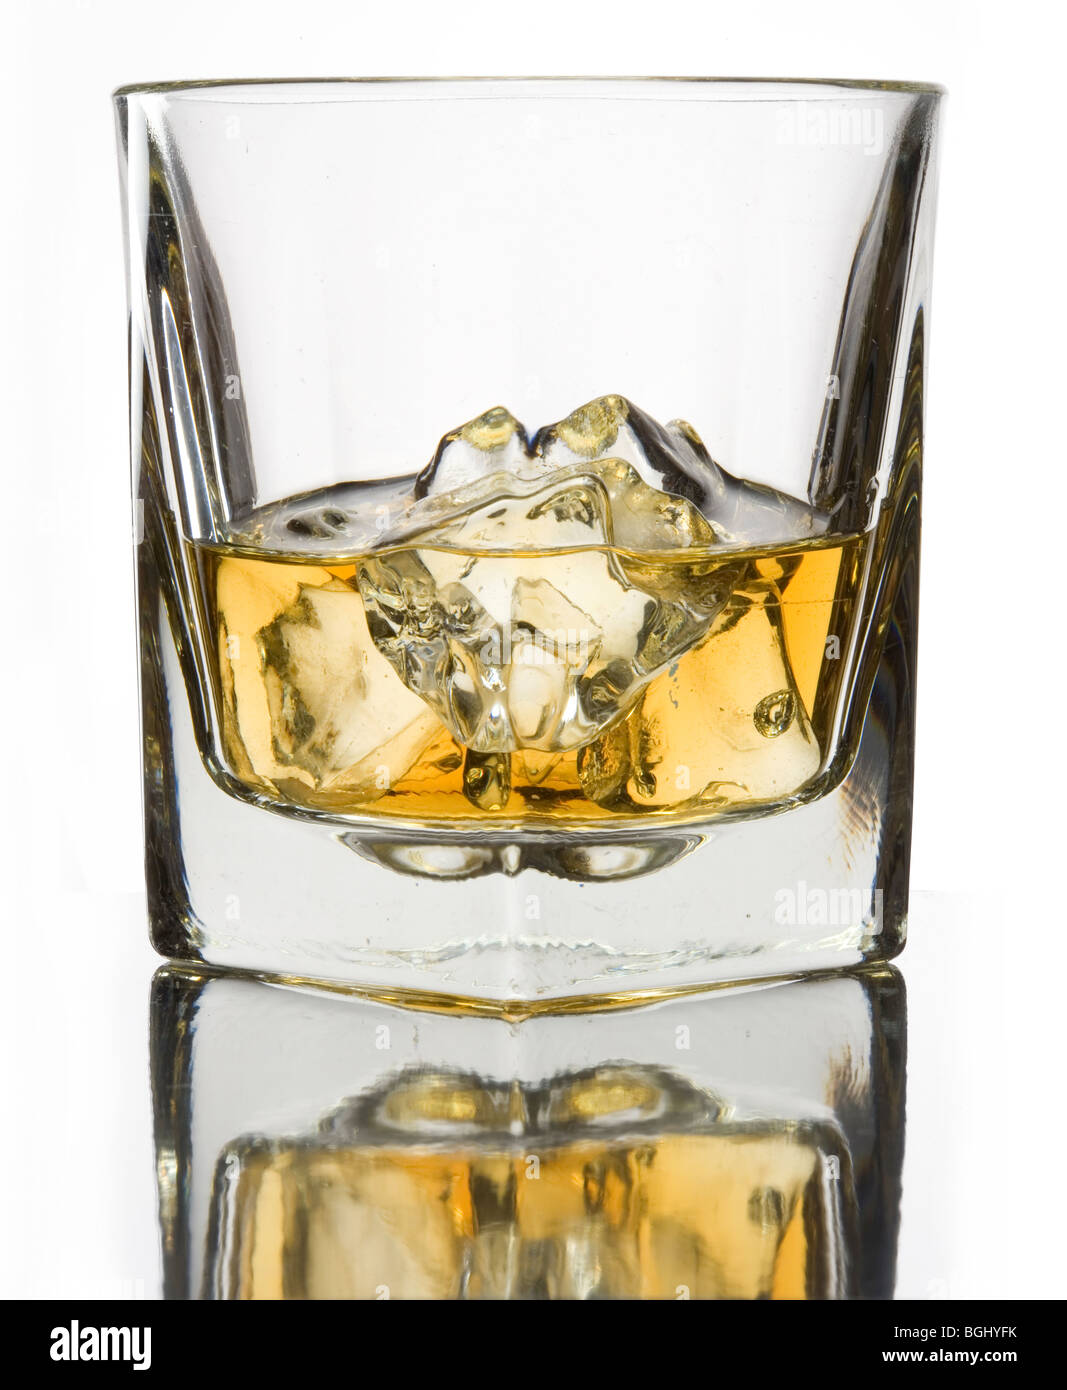 https://c8.alamy.com/comp/BGHYFK/glass-of-scotch-whisky-with-ice-BGHYFK.jpg